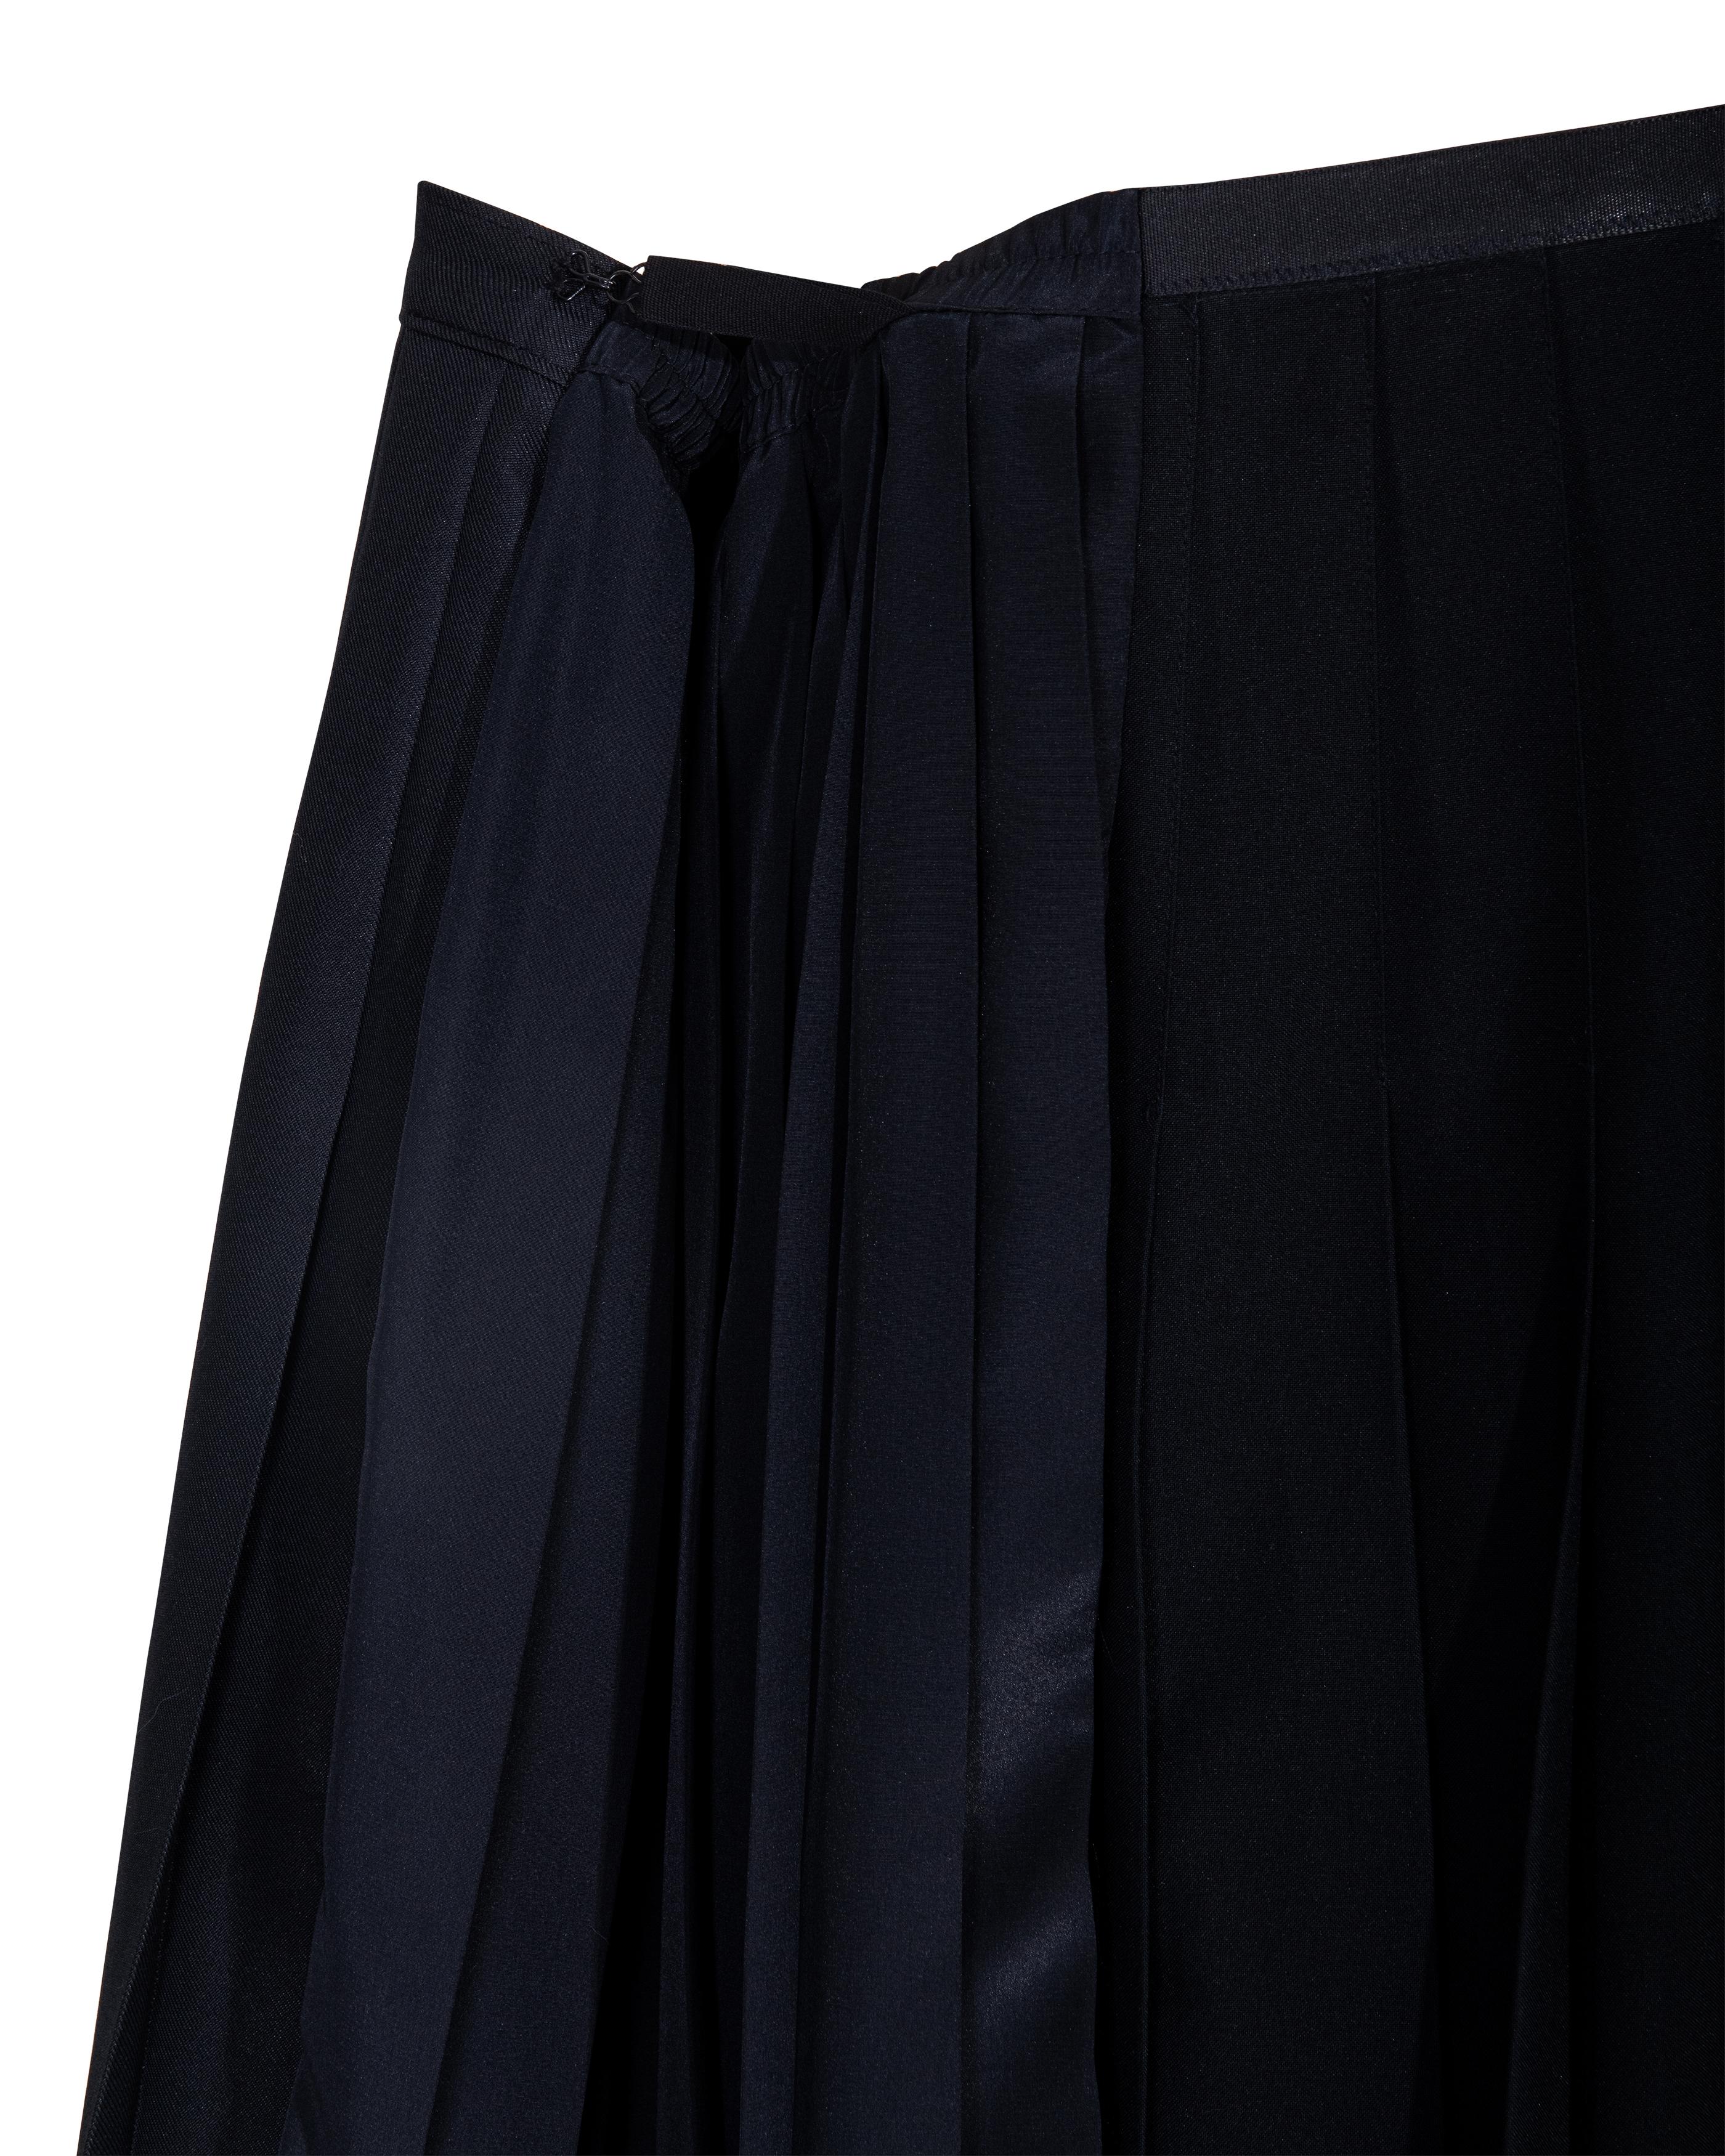 S/S 2001 Maison Martin Margiela One-of-One Black Pleated Artisanal Maxi Skirt For Sale 2